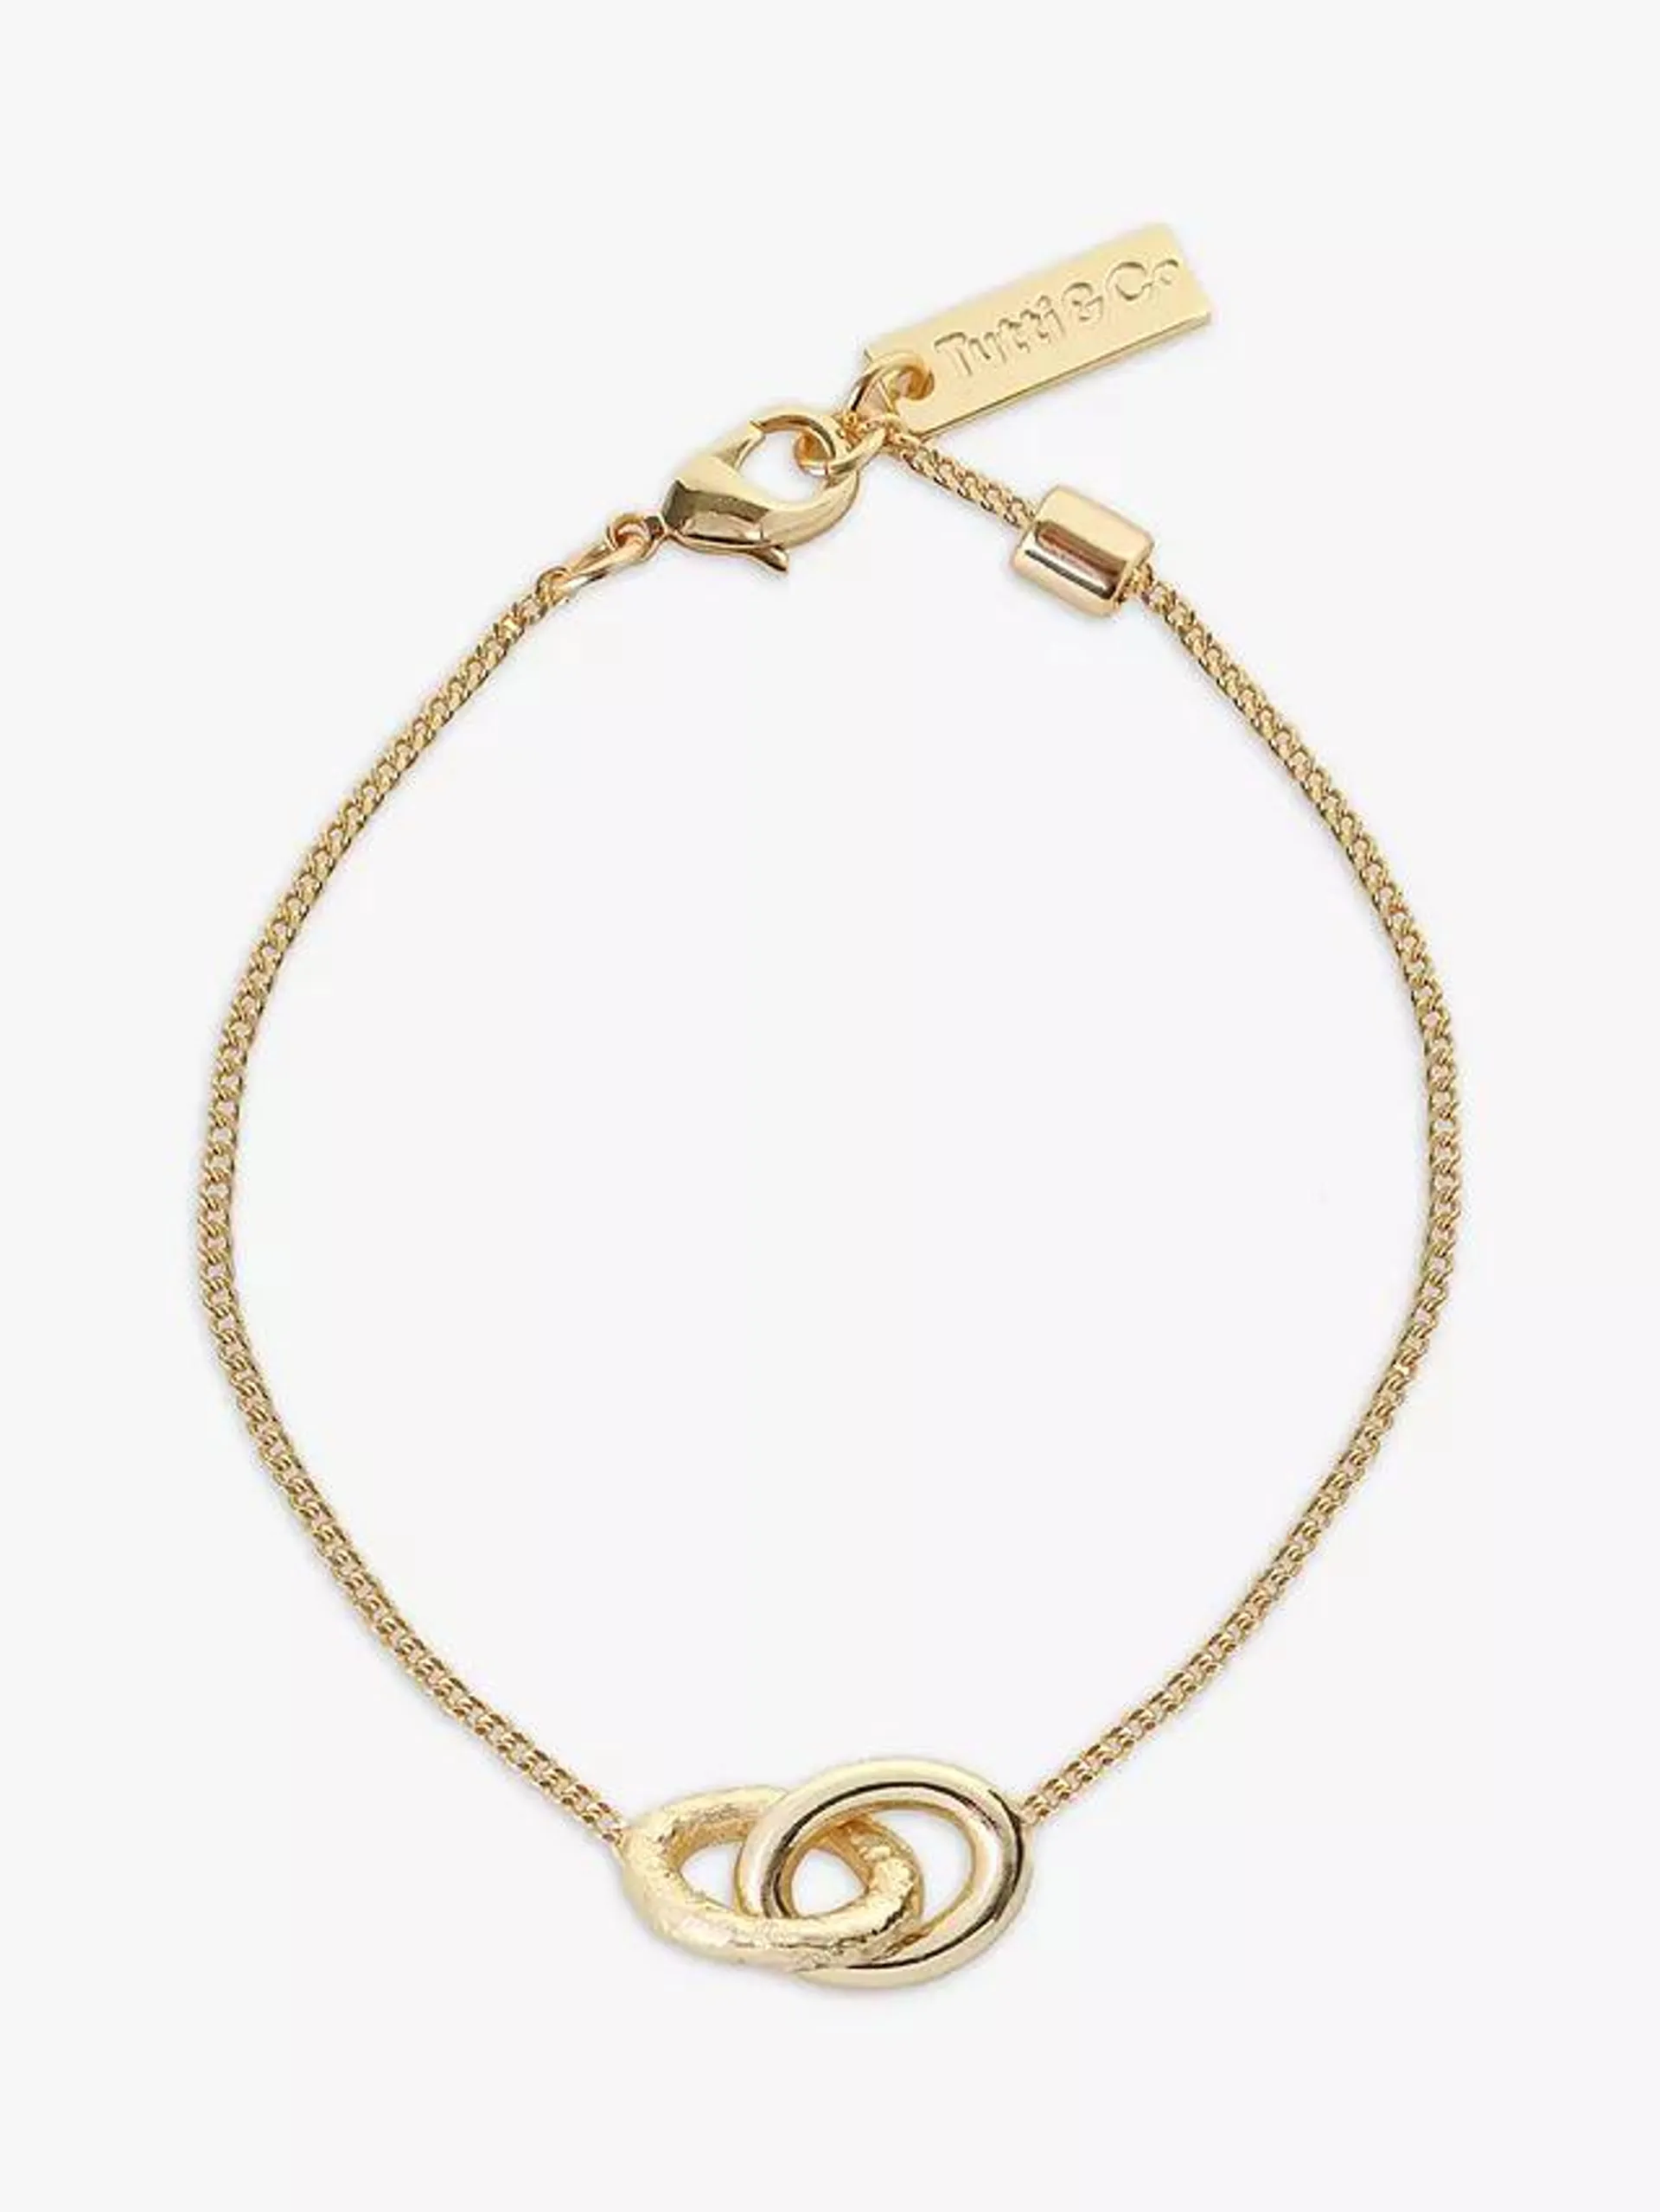 Tutti & Co Daze Double Link Chain Bracelet, Gold